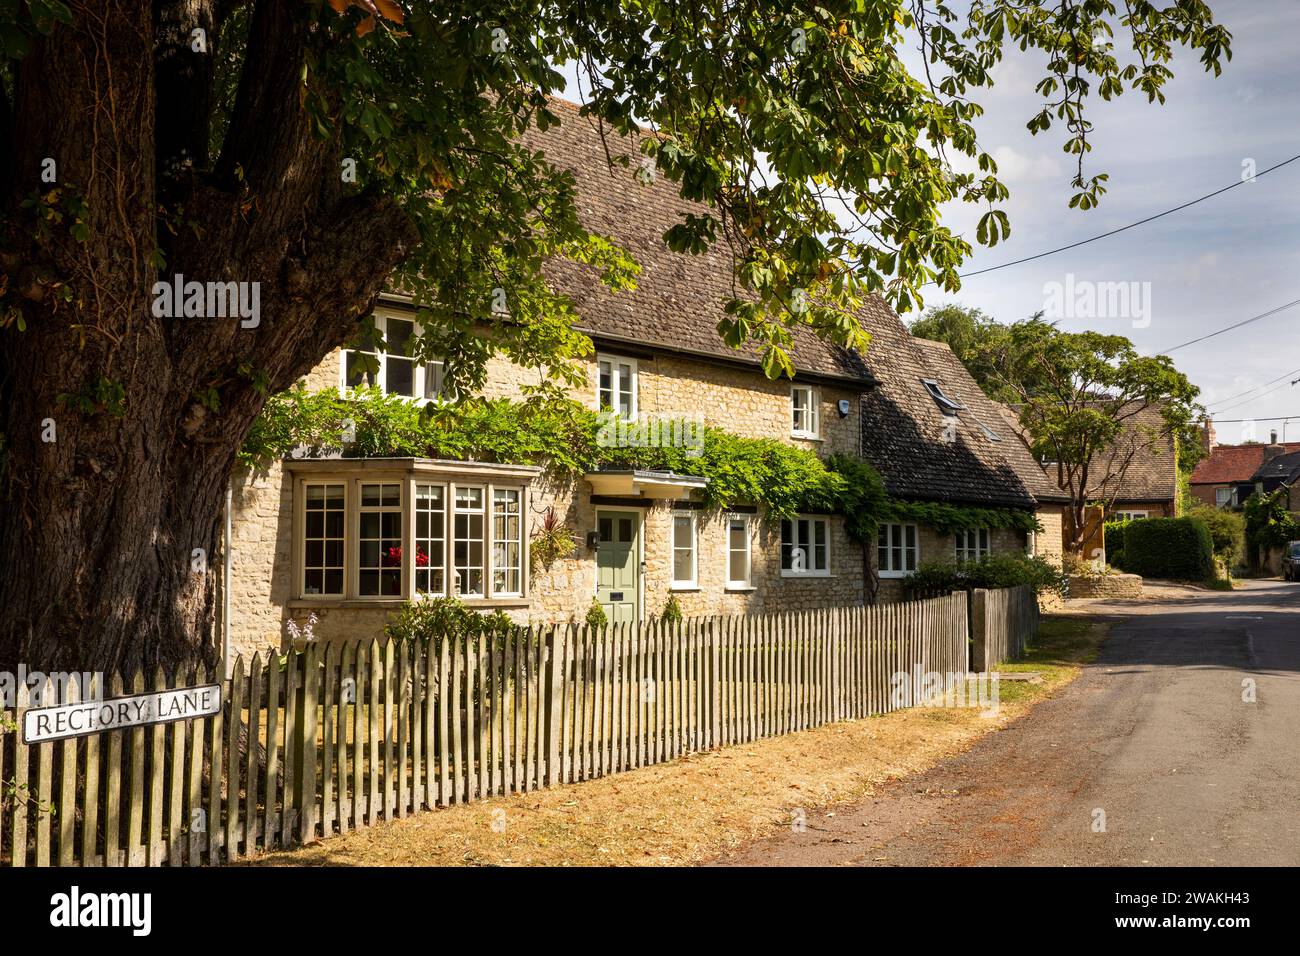 Großbritannien, England, Oxfordshire, Fringford, Rectory Lane, umzäuntes Landhaus Stockfoto